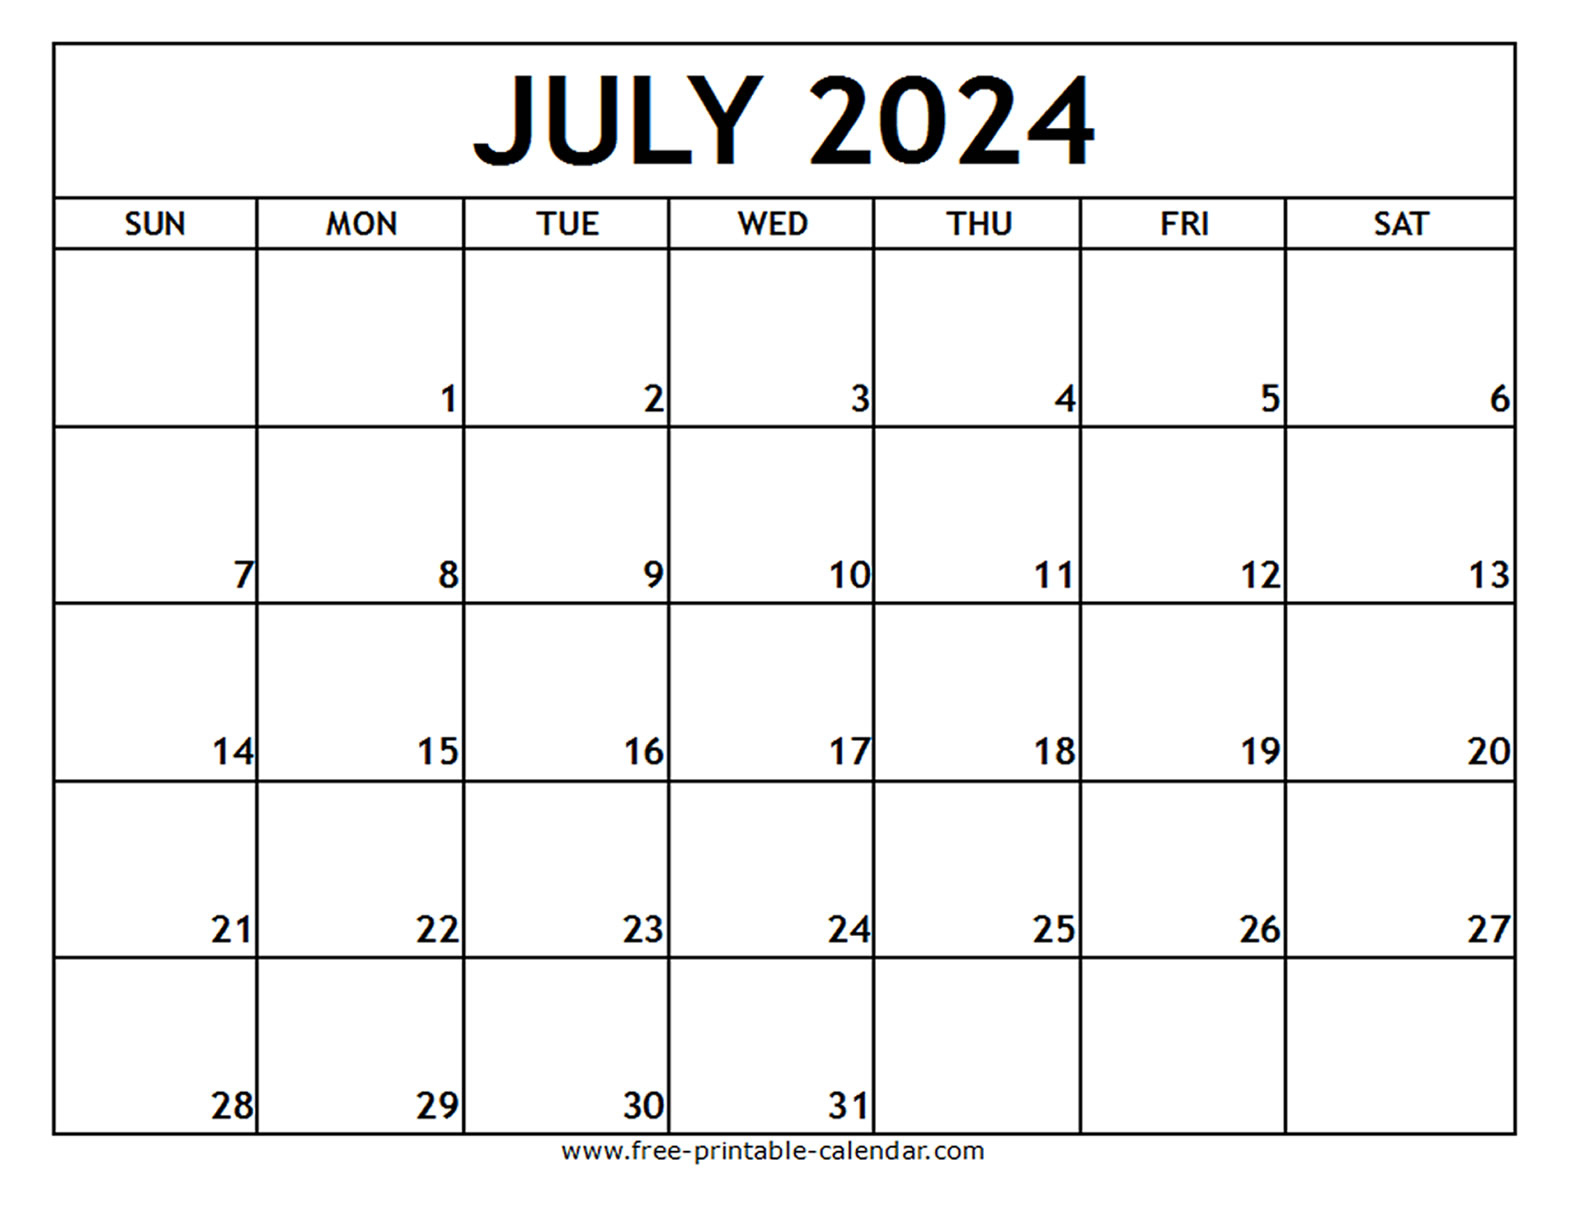 July 2024 Printable Calendar - Free-Printable-Calendar | 19 July 2024 Calendar Printable